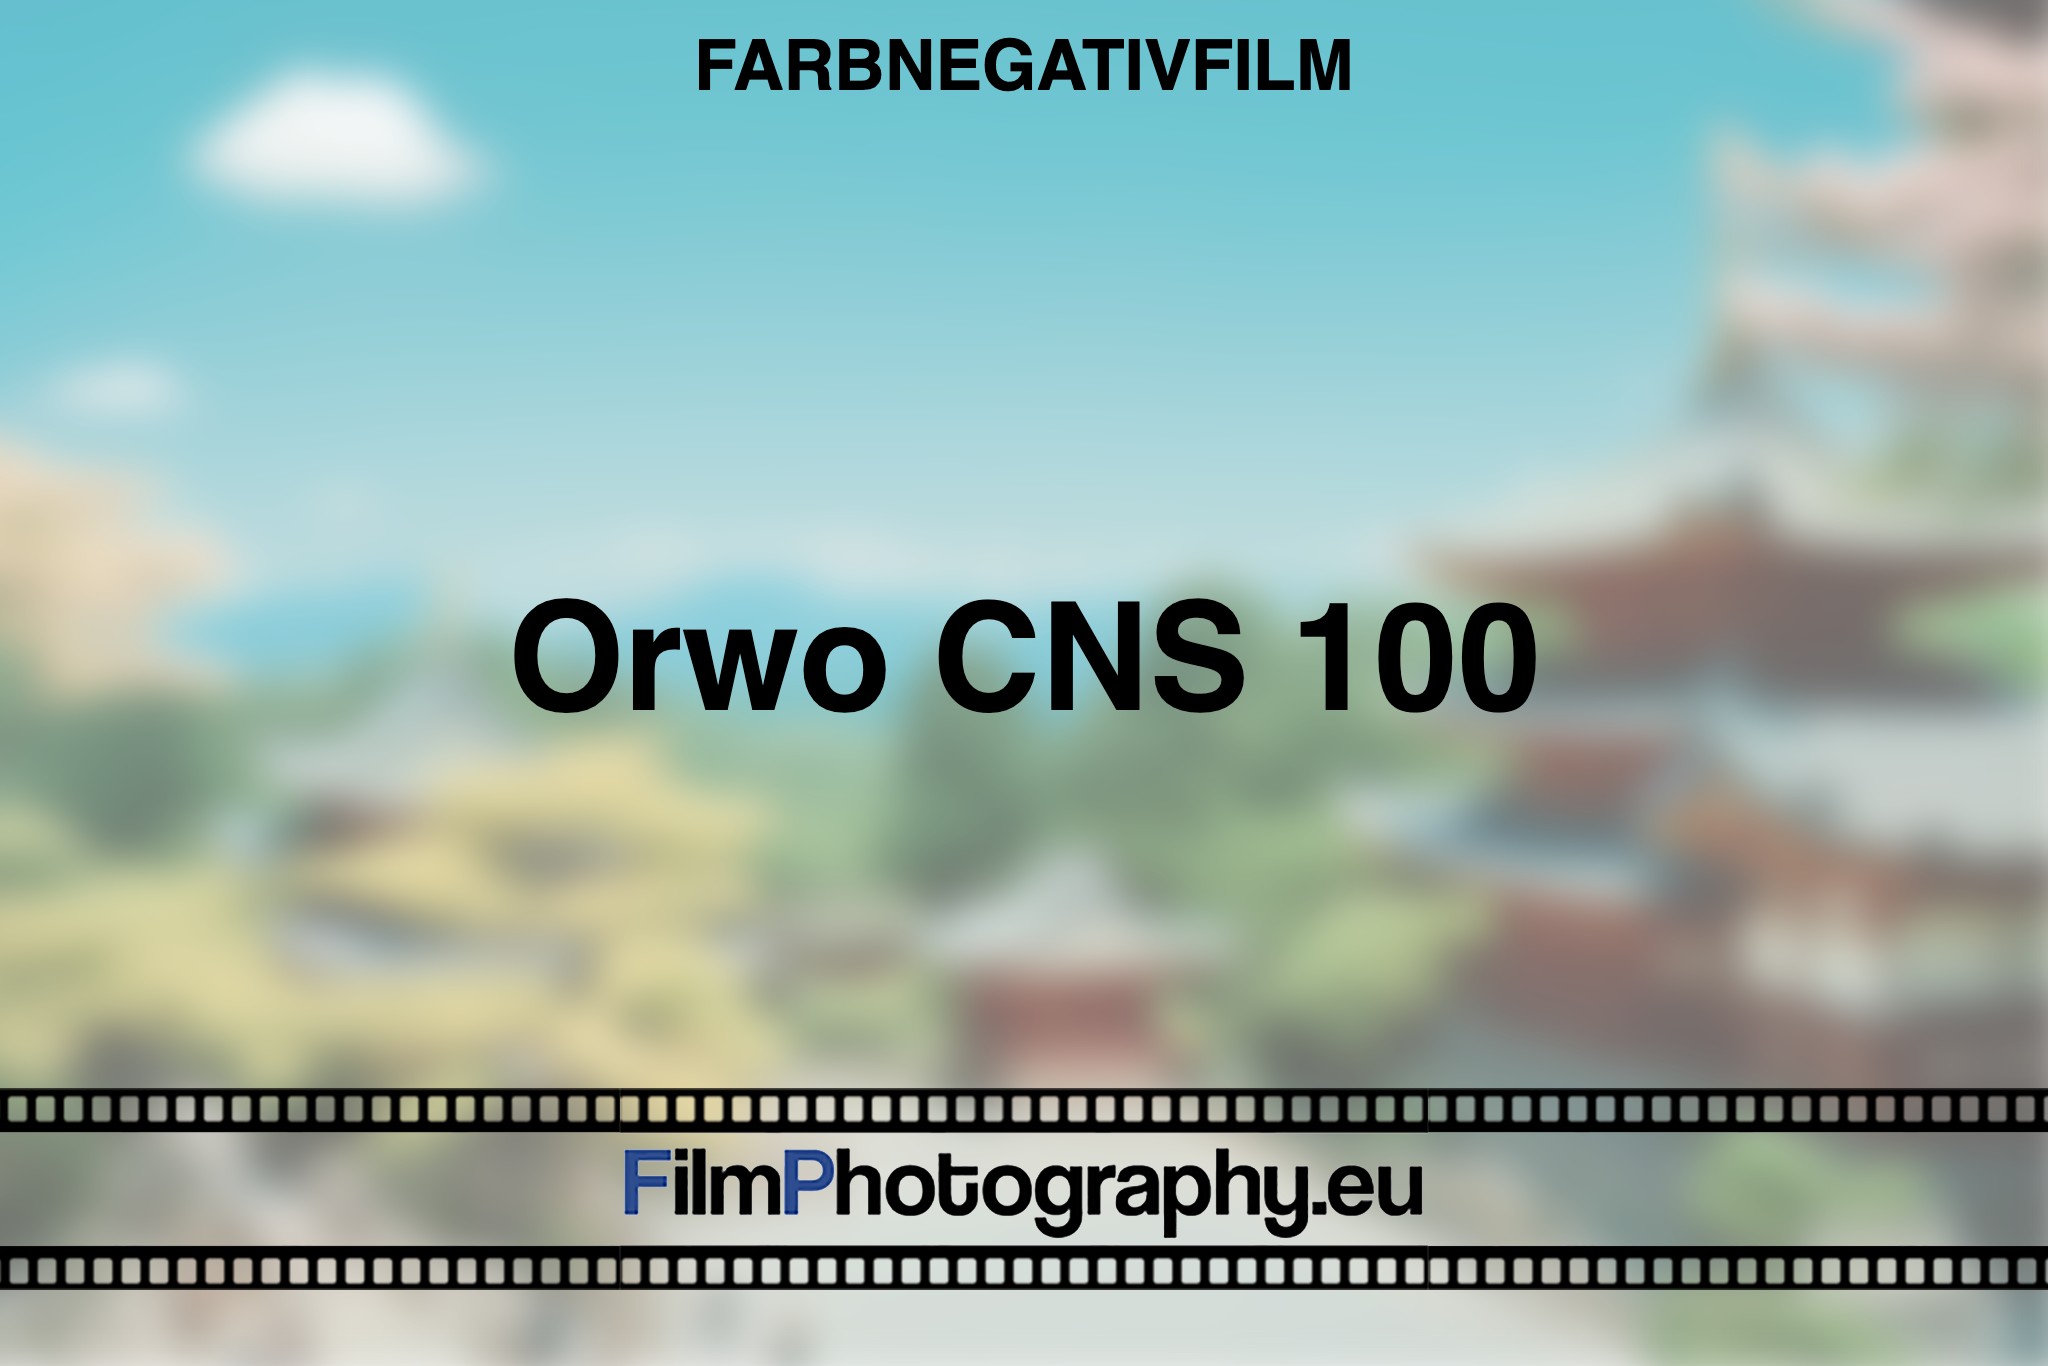 orwo-cns-100-farbnegativfilm-bnv